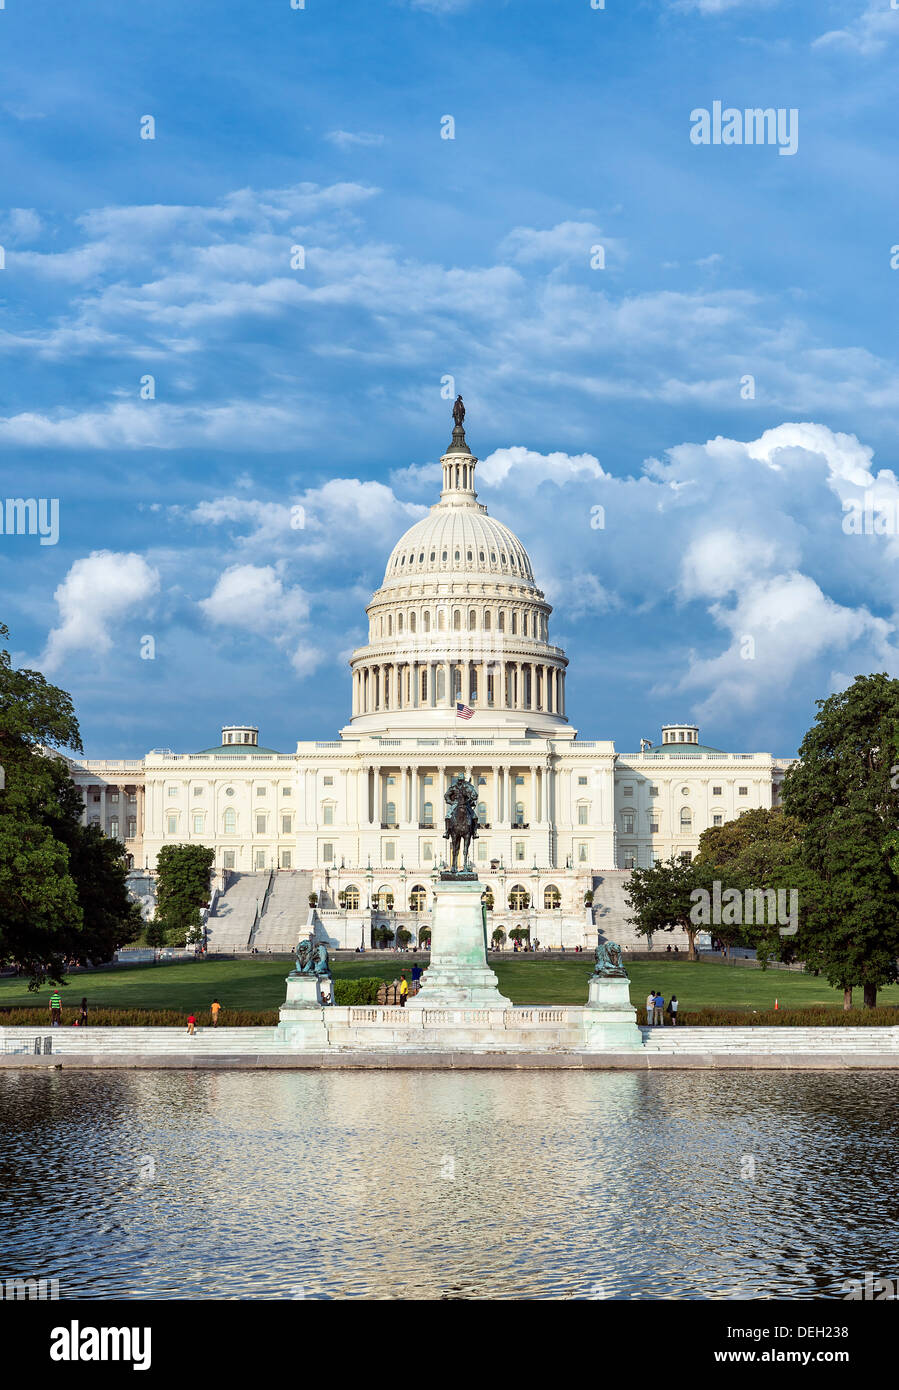 Widerspiegelnder Teich, Ulysses S. Grant Memorial und US Capitol Building, Washington D.C., USA Stockfoto